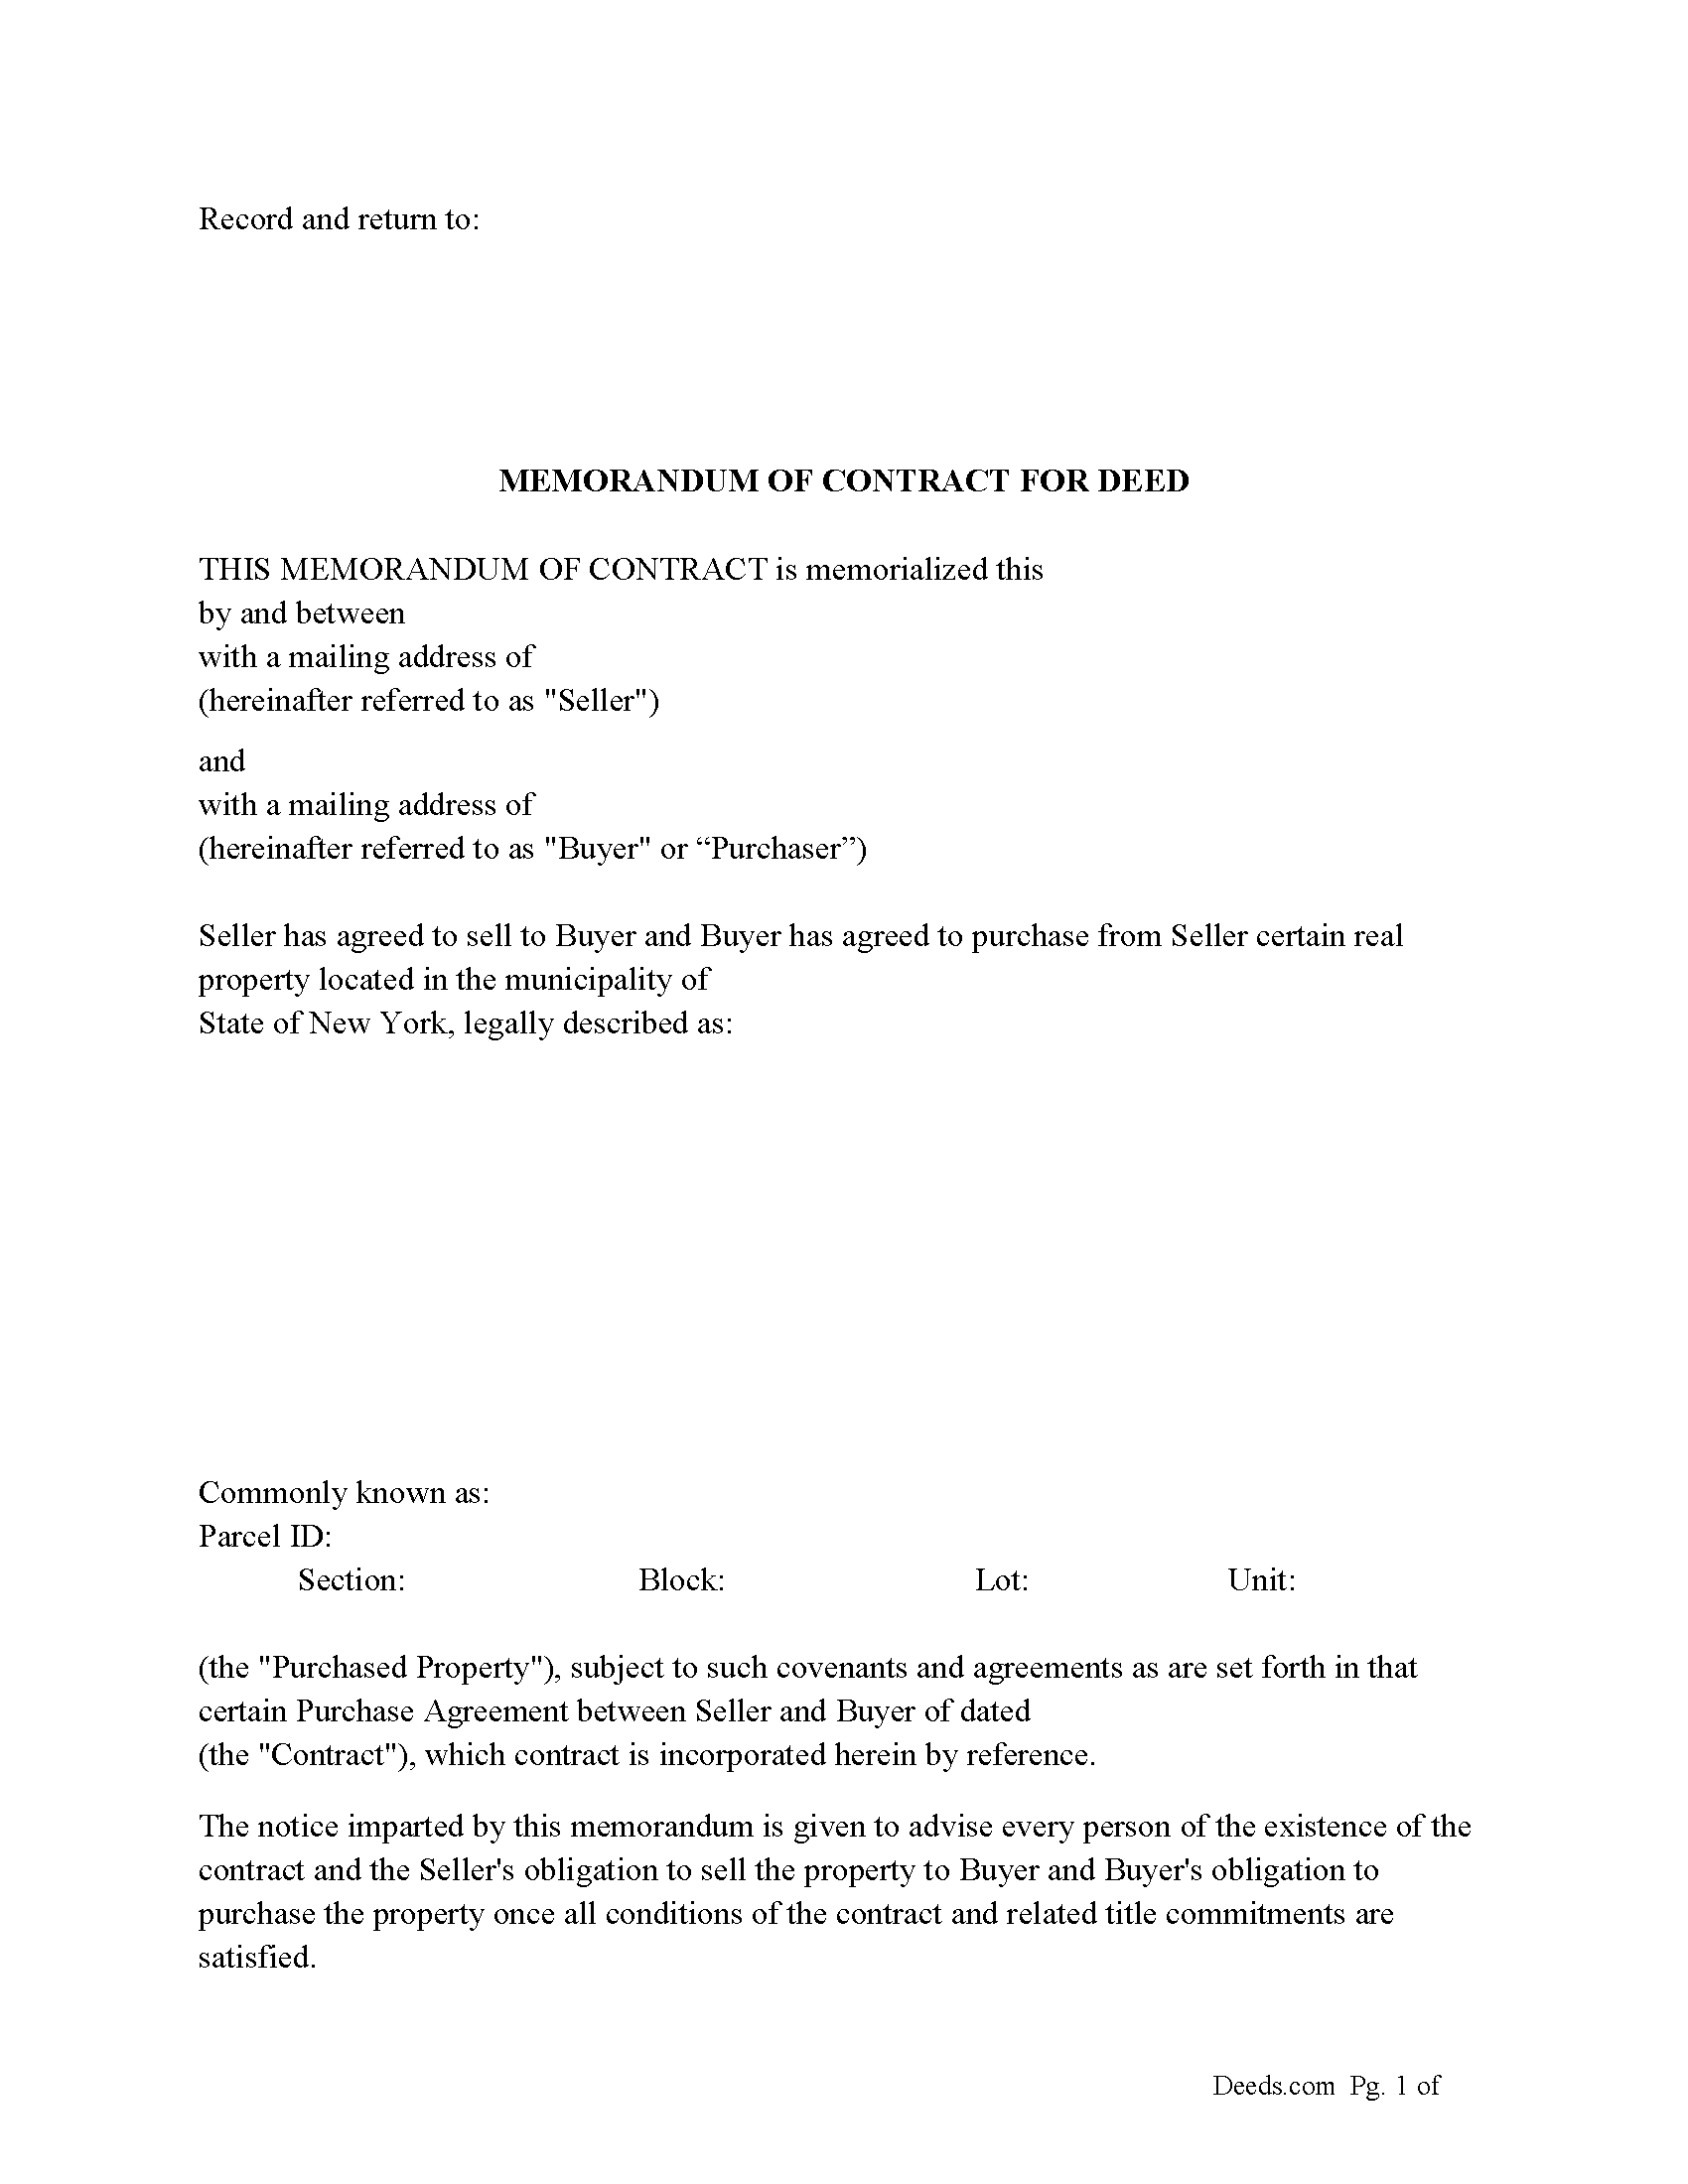 Seneca County Memorandum of Contract for Deed Form